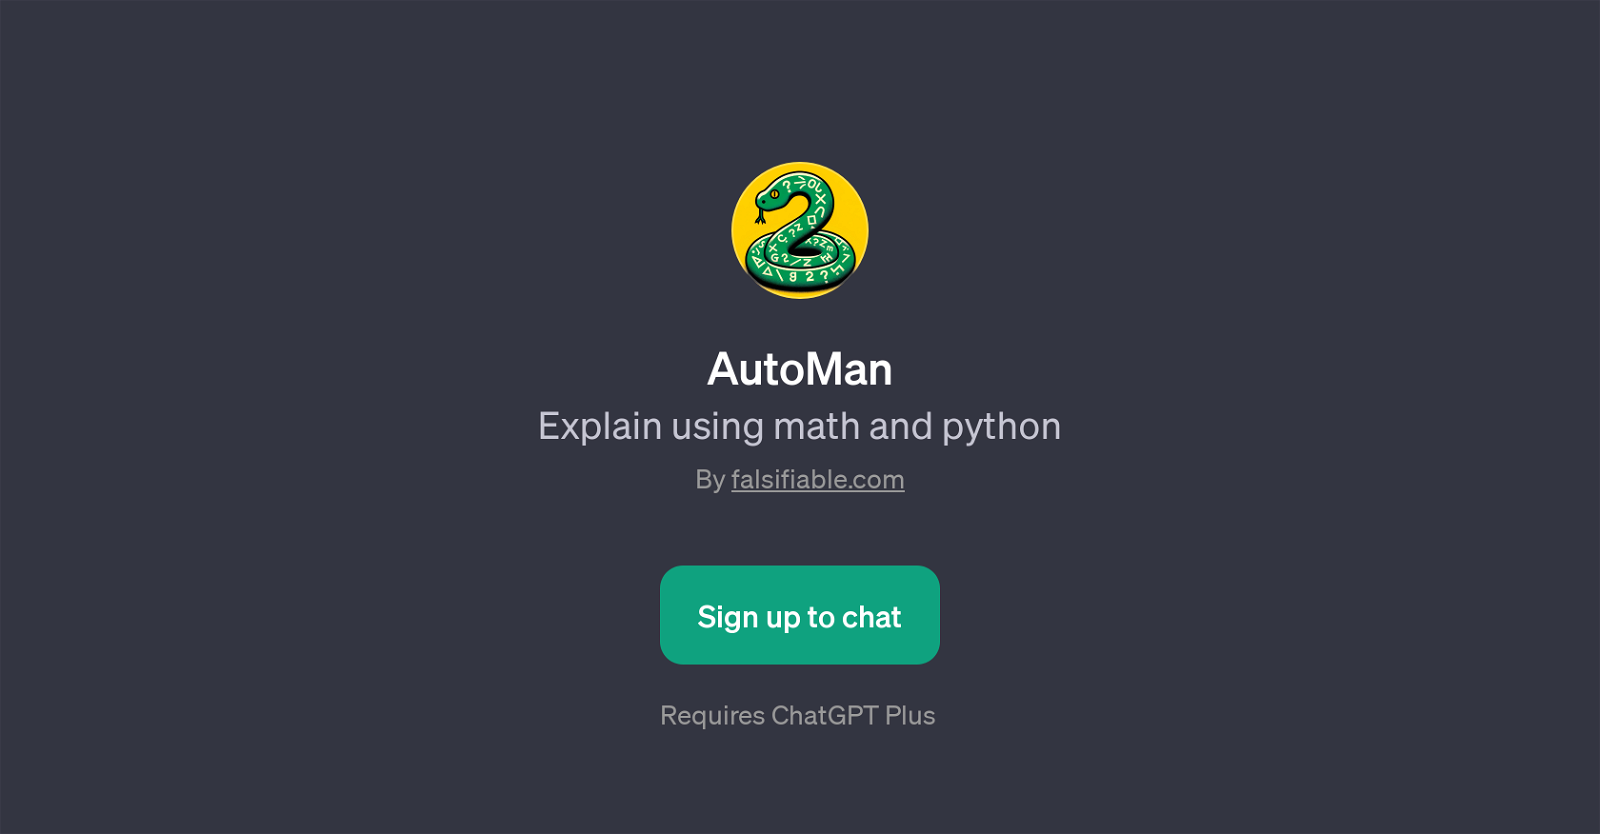 AutoMan website